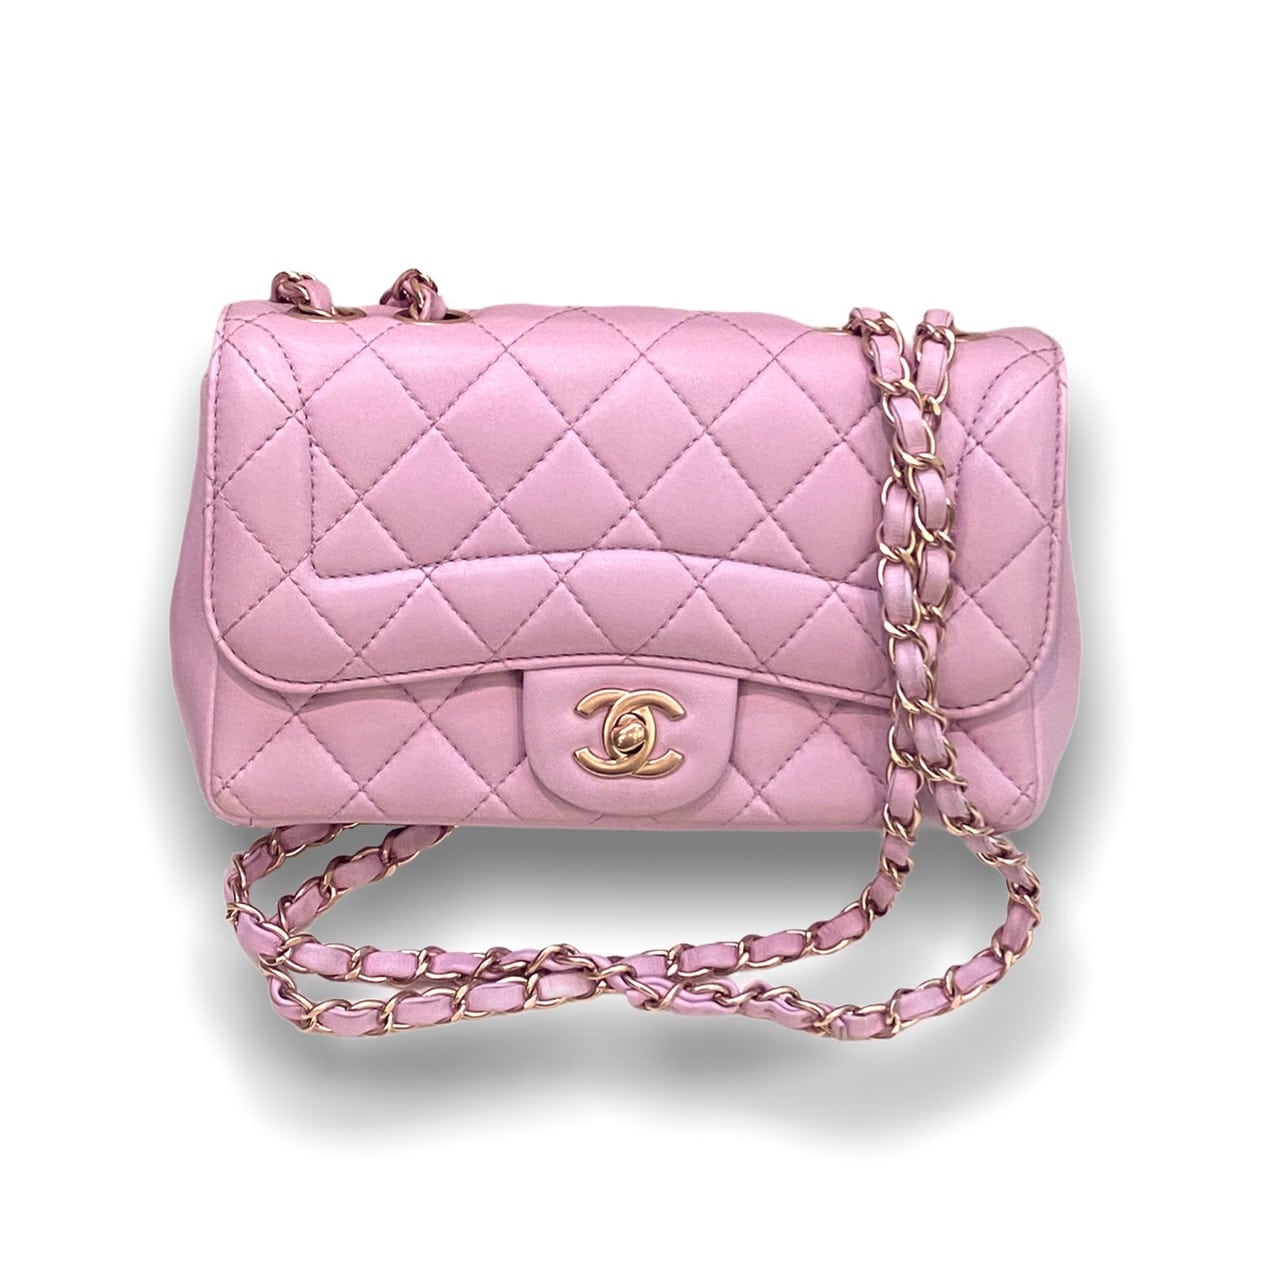 Unused!Chanel seasonal Classic 9” pink lambskin with gold hardware